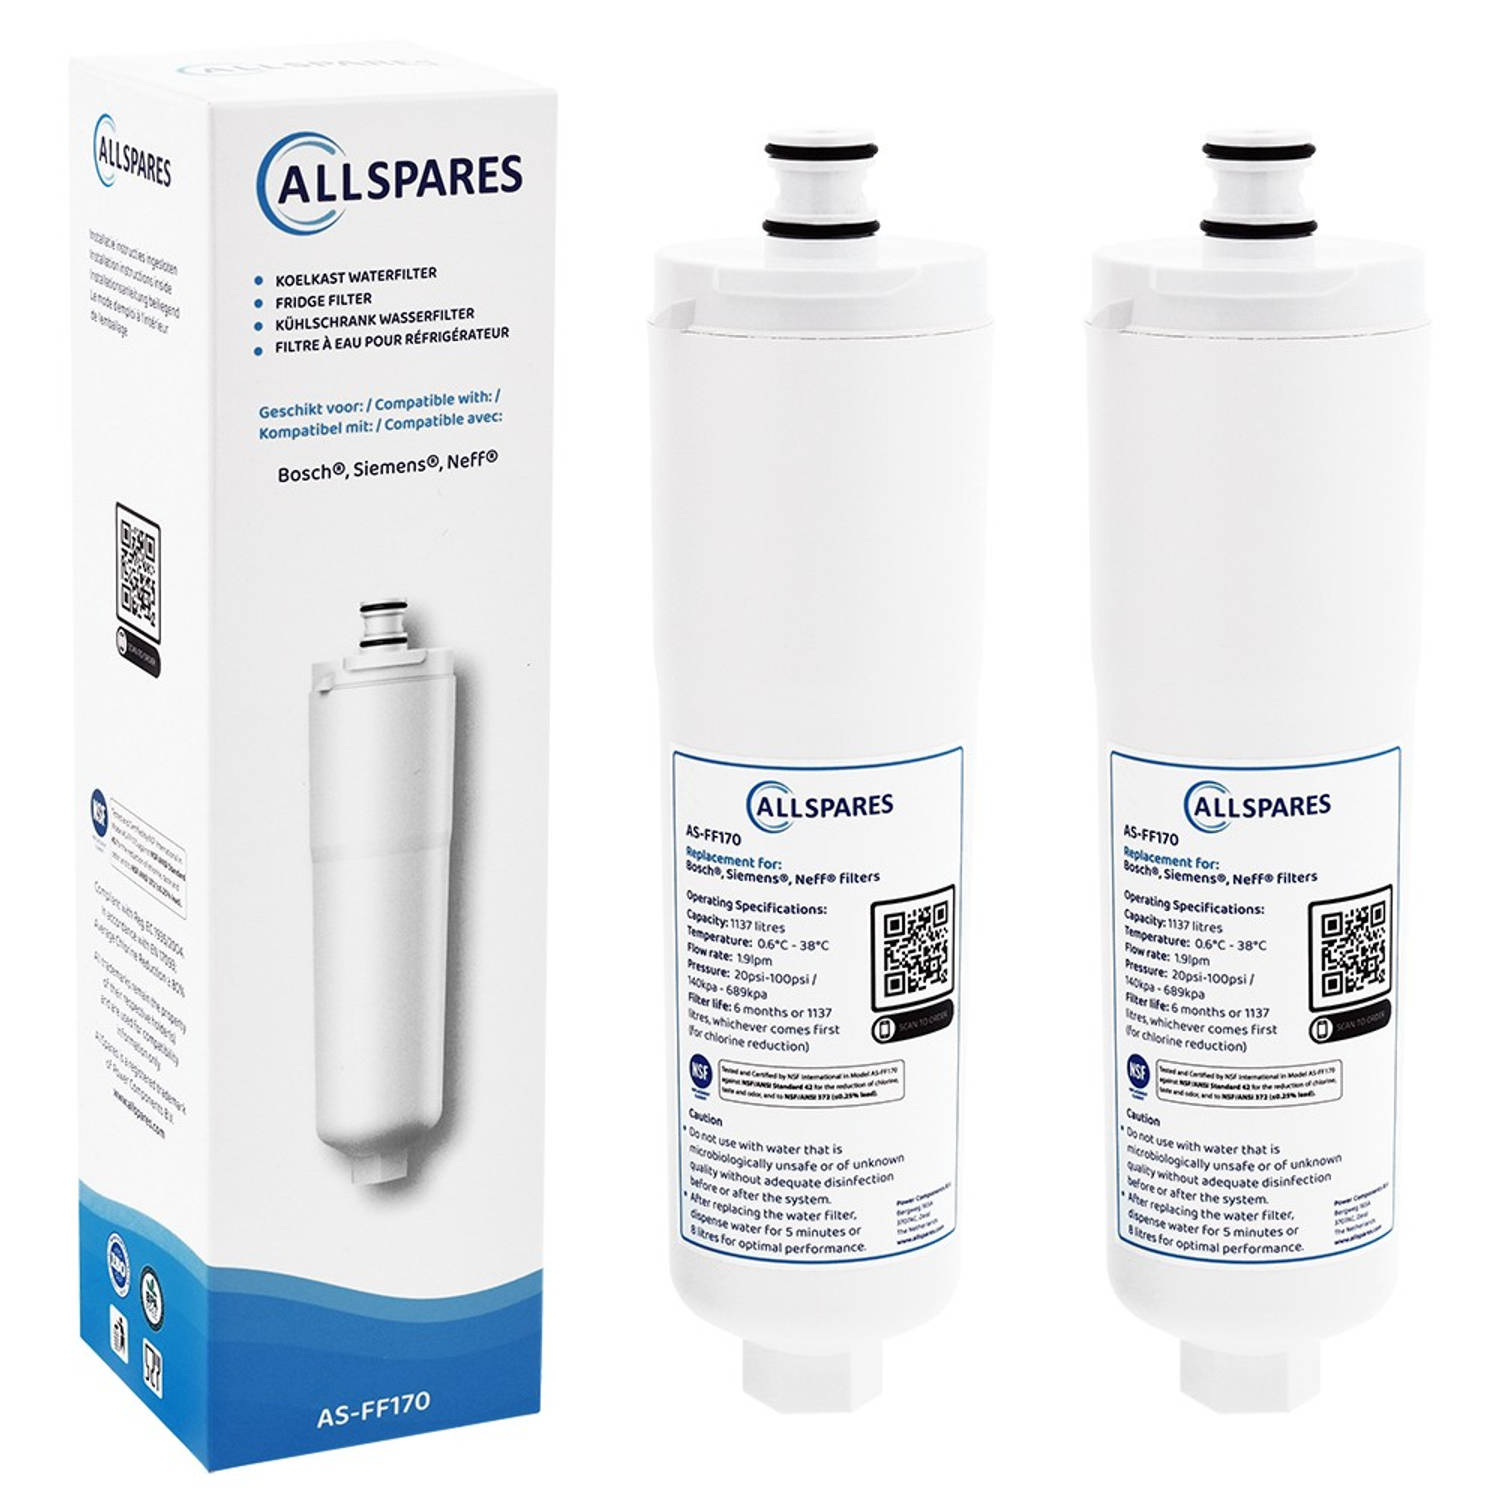 AllSpares Bosch-Siemens Waterfilter Koelkast (2St.) CS-52